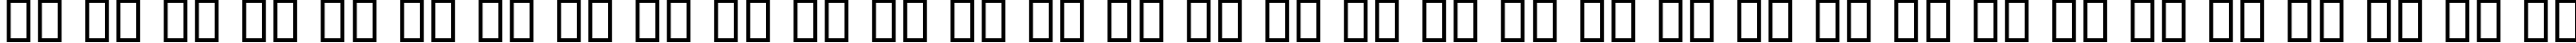 Пример написания русского алфавита шрифтом B Tawfig Outline